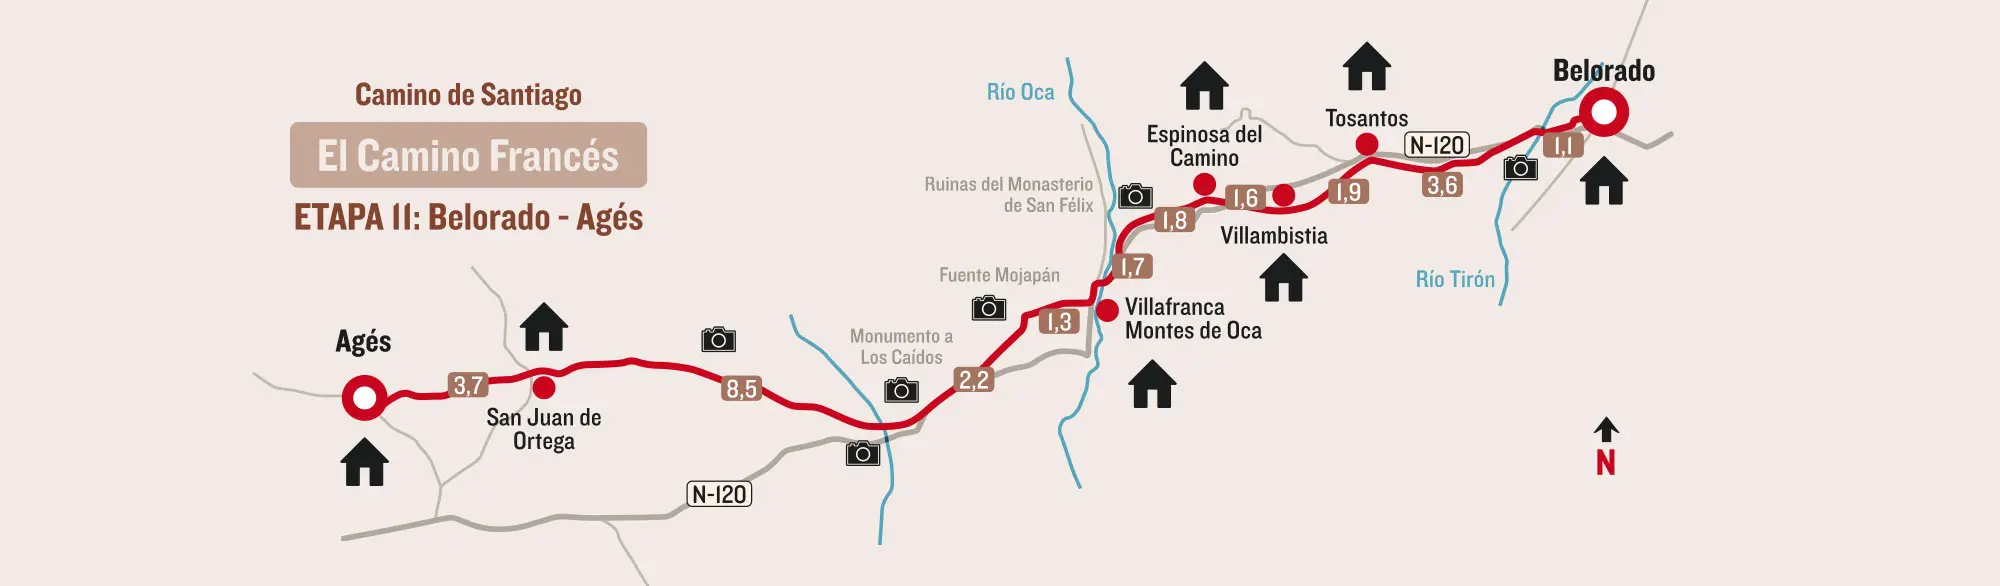 mapa-camino-santiago